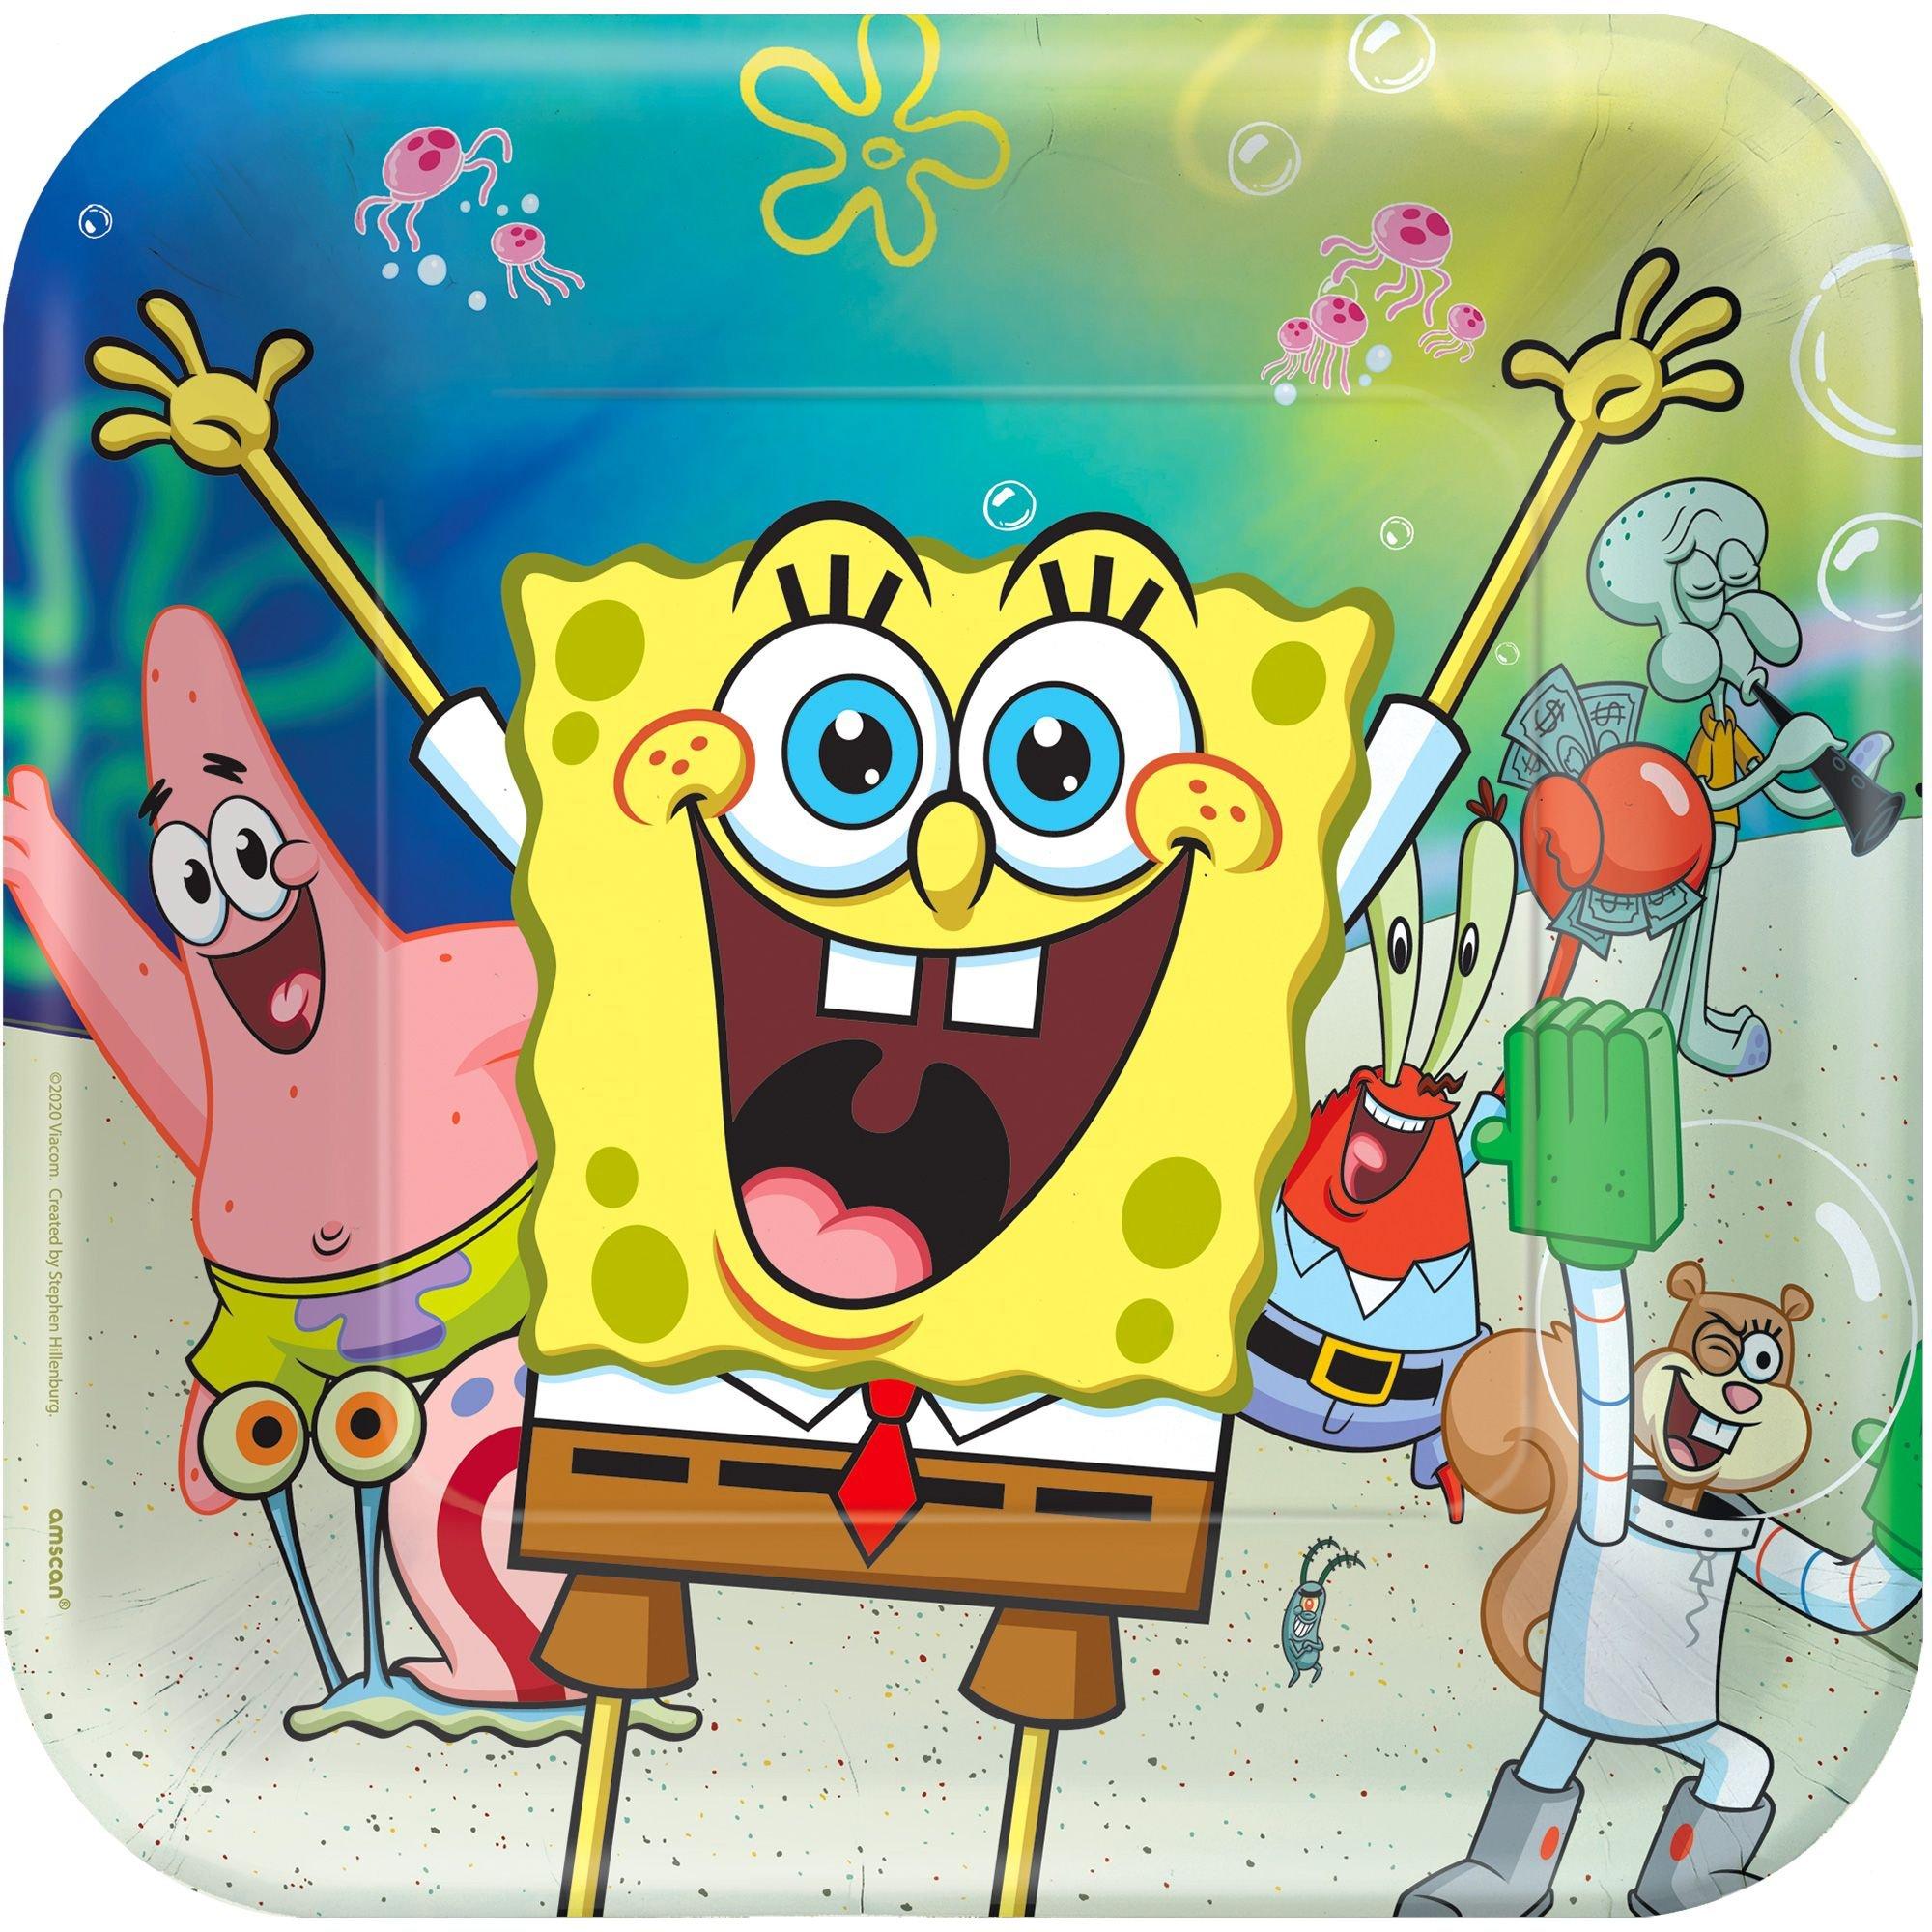 SpongeBob SquarePants & Friends Paper Square Lunch Plates, 9in, 8ct